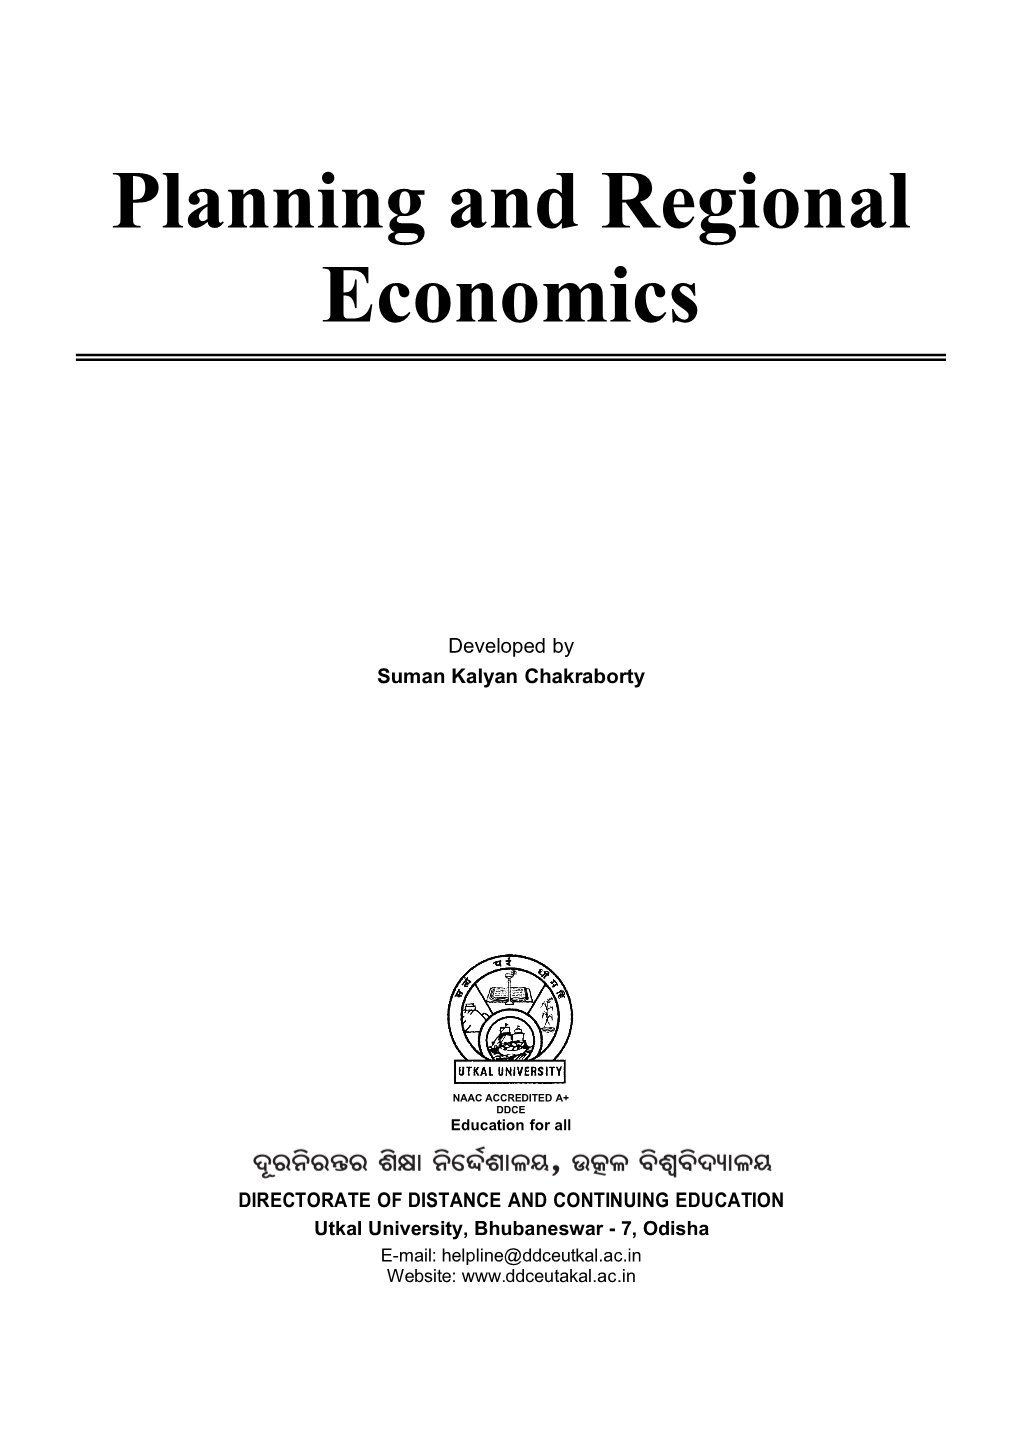 ECO 3.4 Planning and Regional Economics